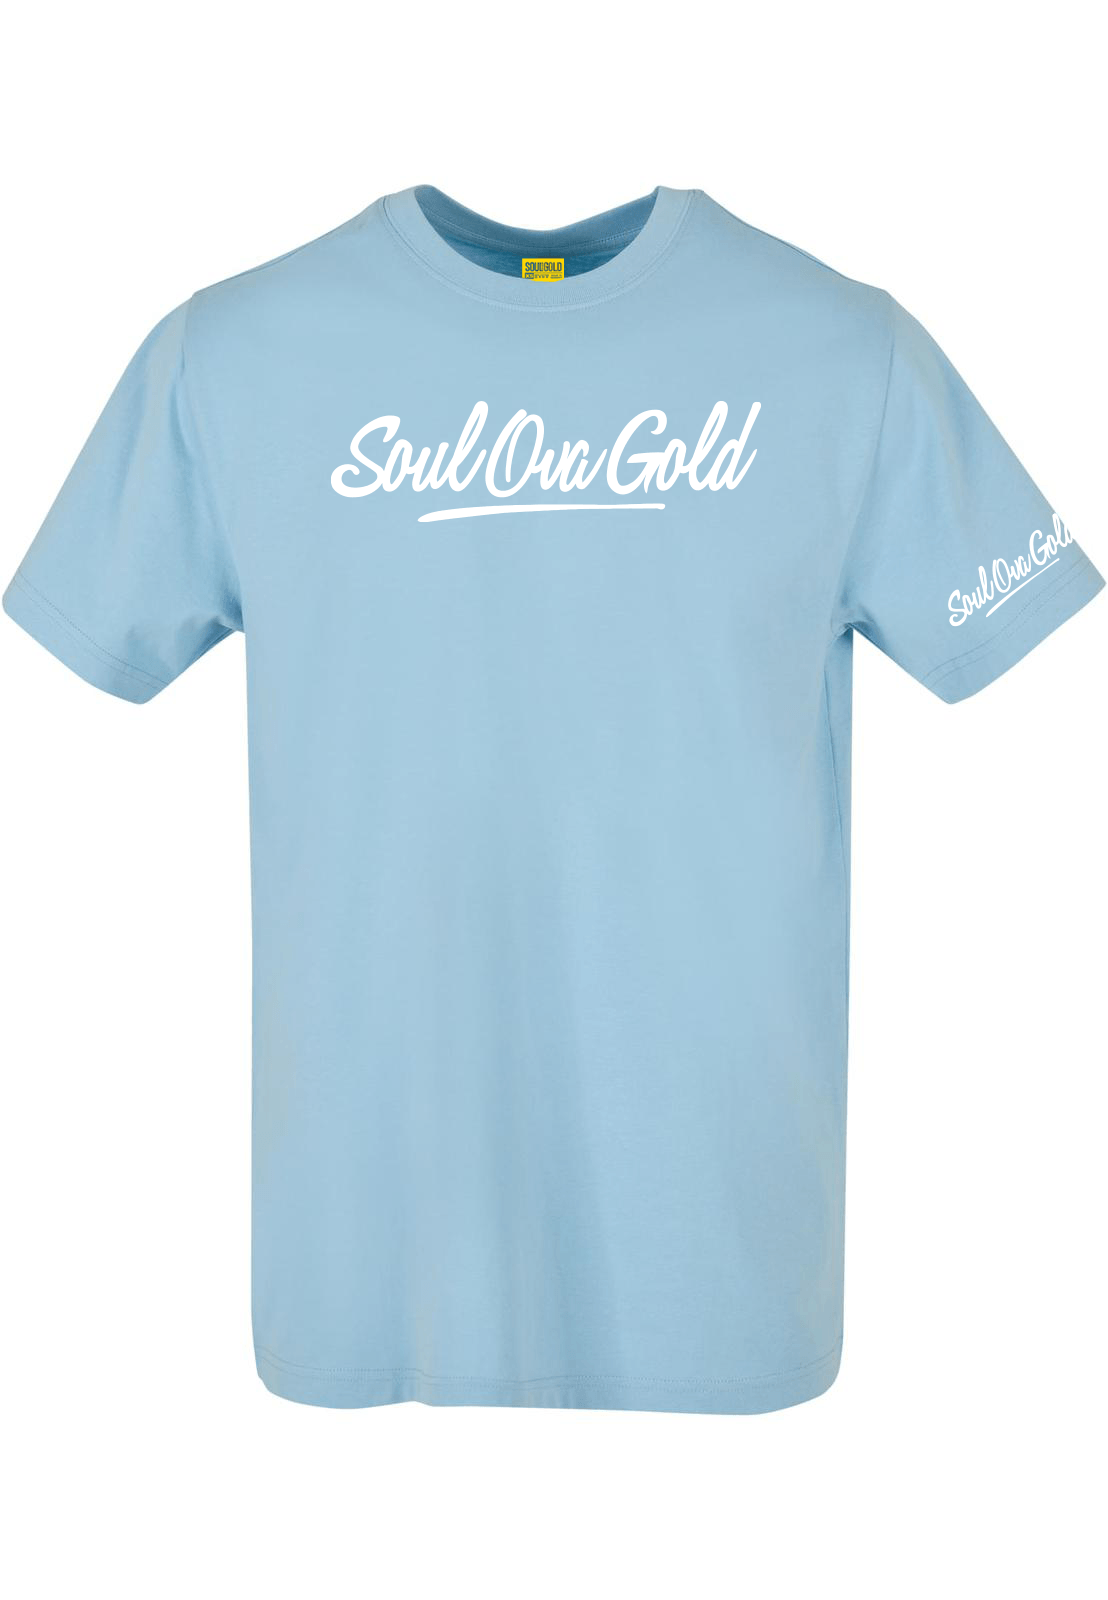 Soul Ova Gold Men's Tees Stick 2 The Script Classic fit T-Shirt (Heaven Blue)